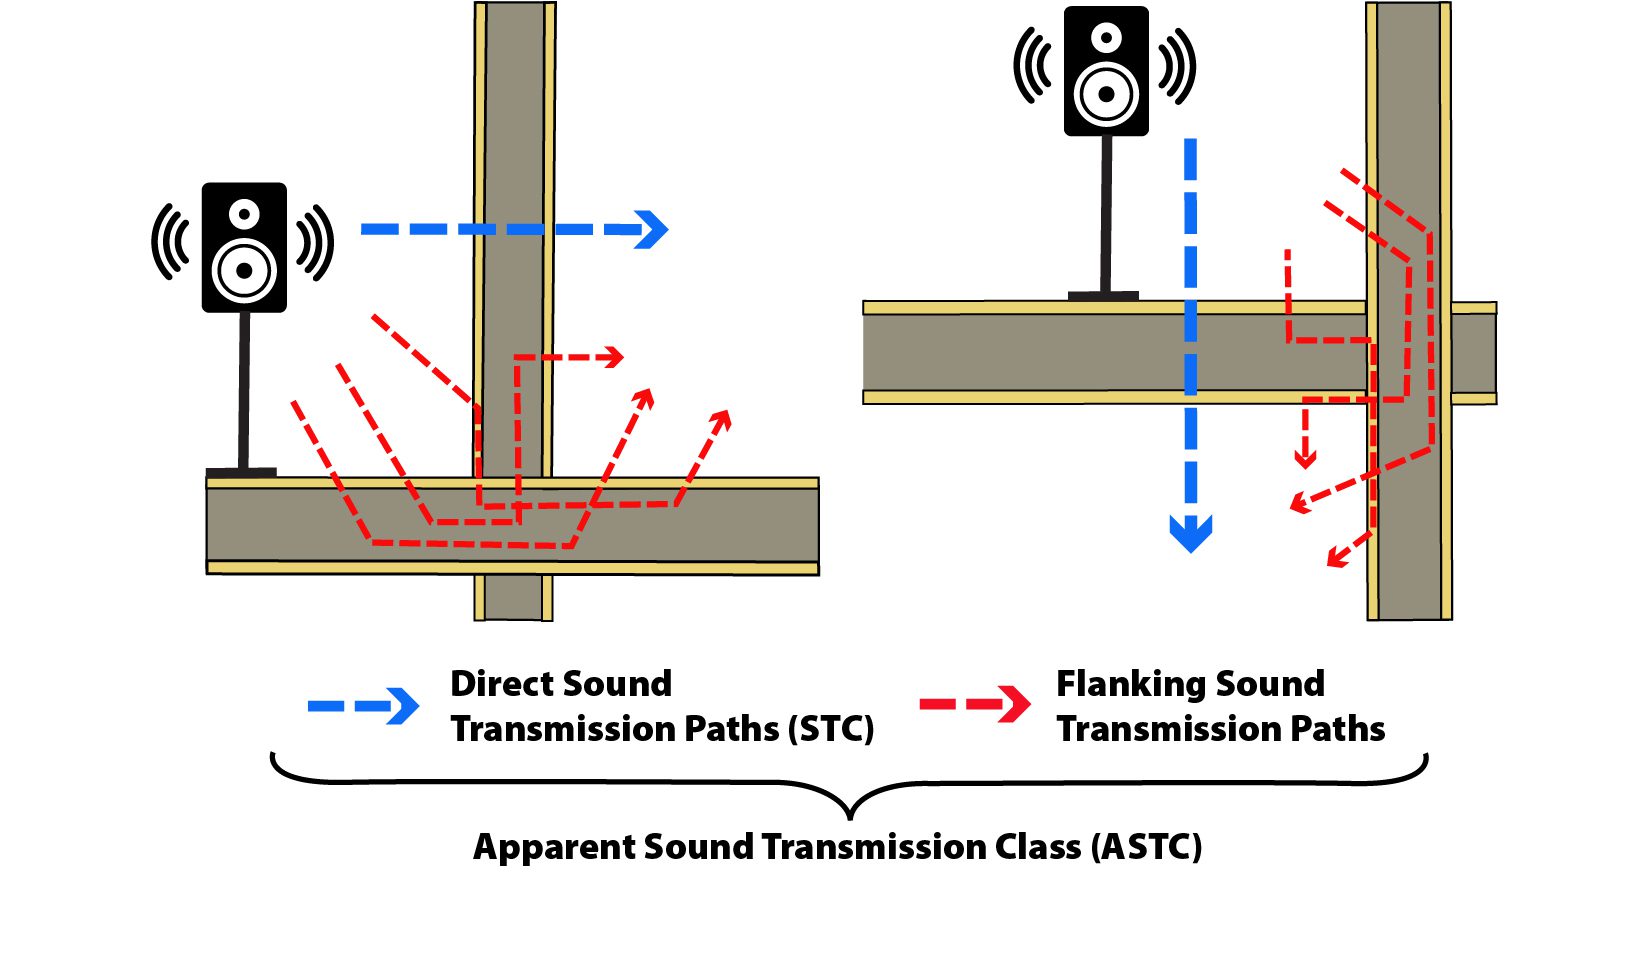 Sound Transmission through Flanking Paths